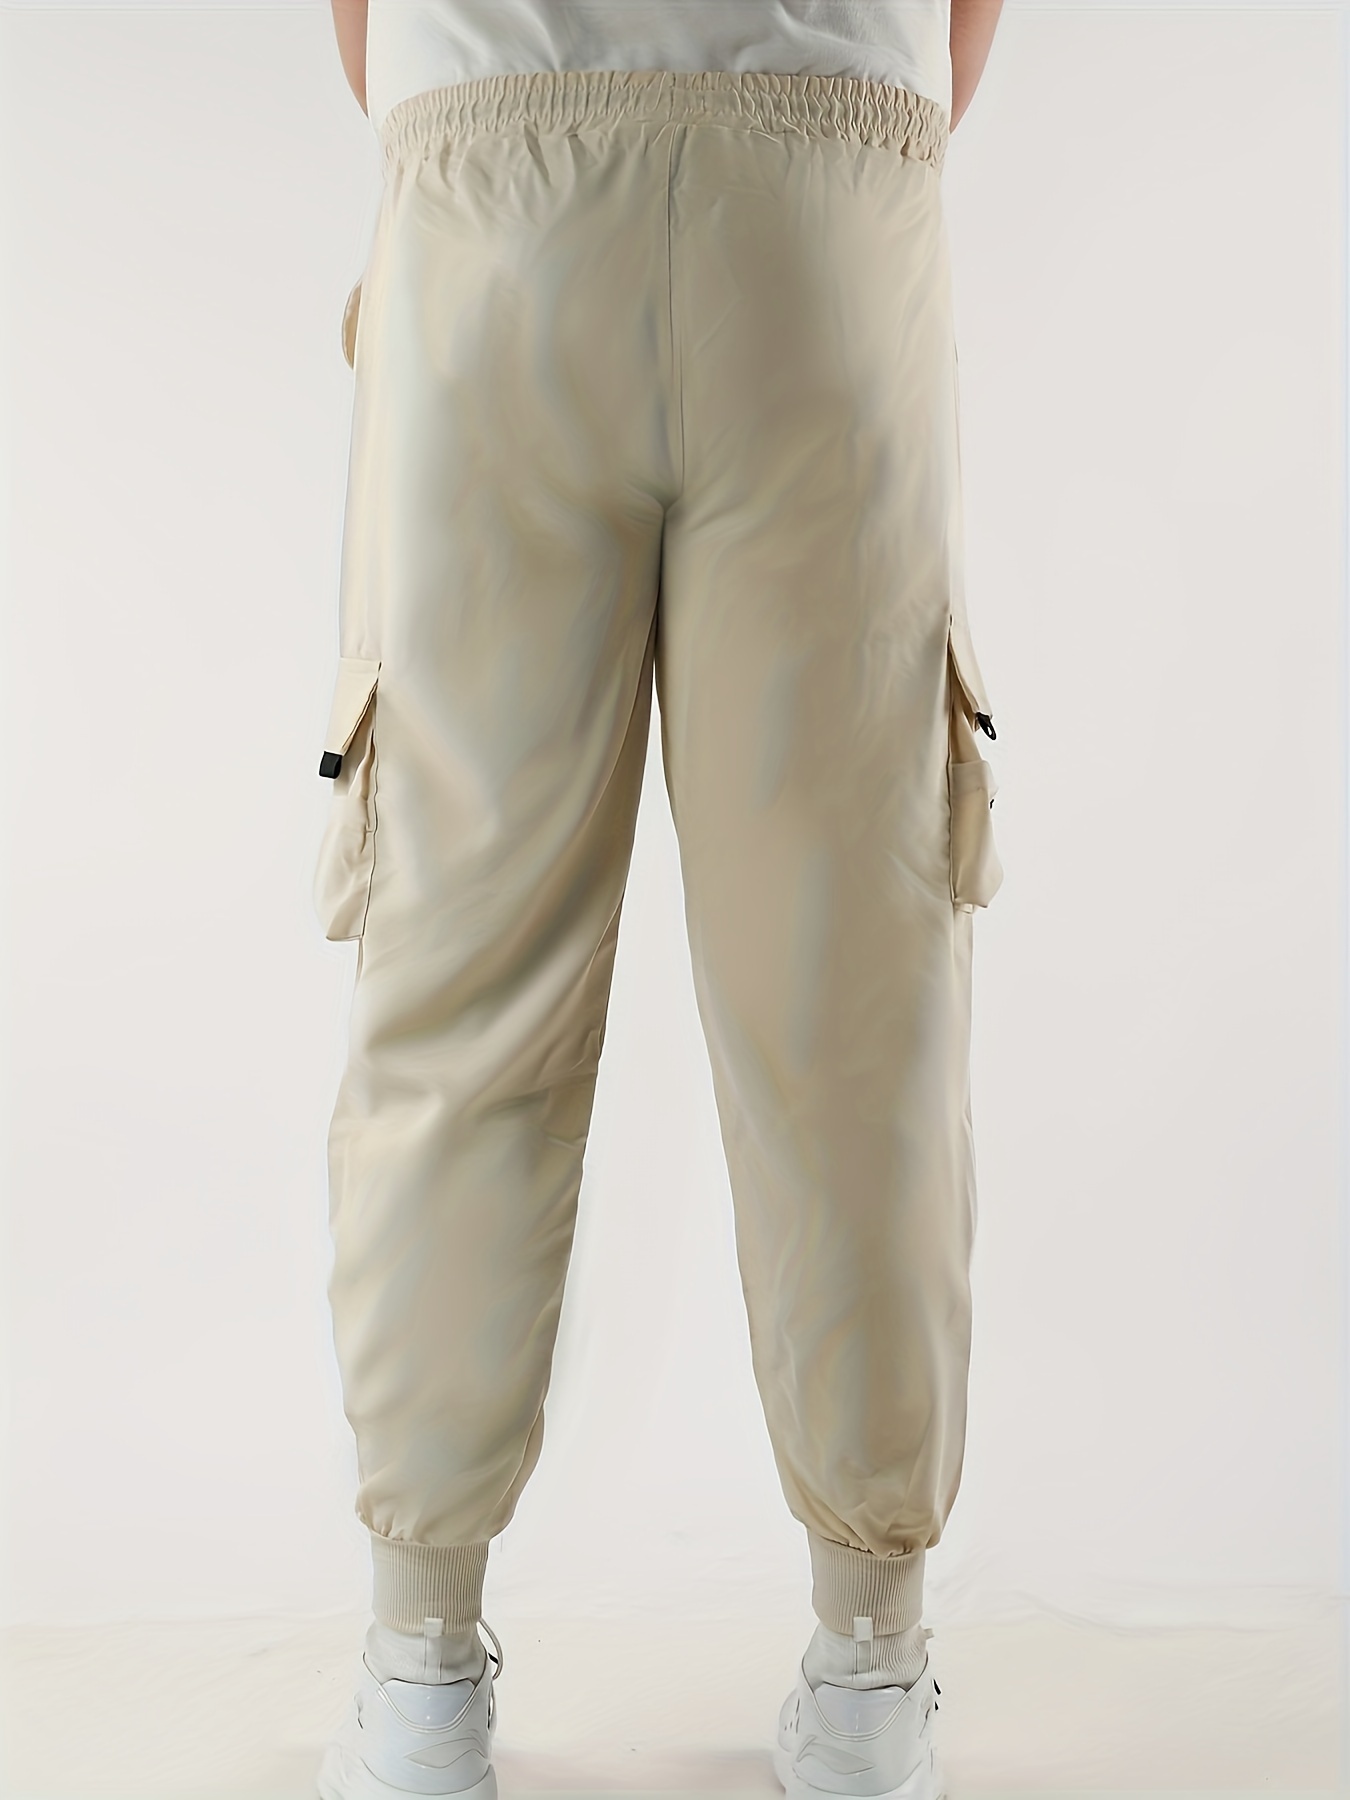 Pantalones cargo de moda para hombre con múltiples bolsillos, diseño  clásico, joggers sueltos casuales para otoño e invierno al aire libre